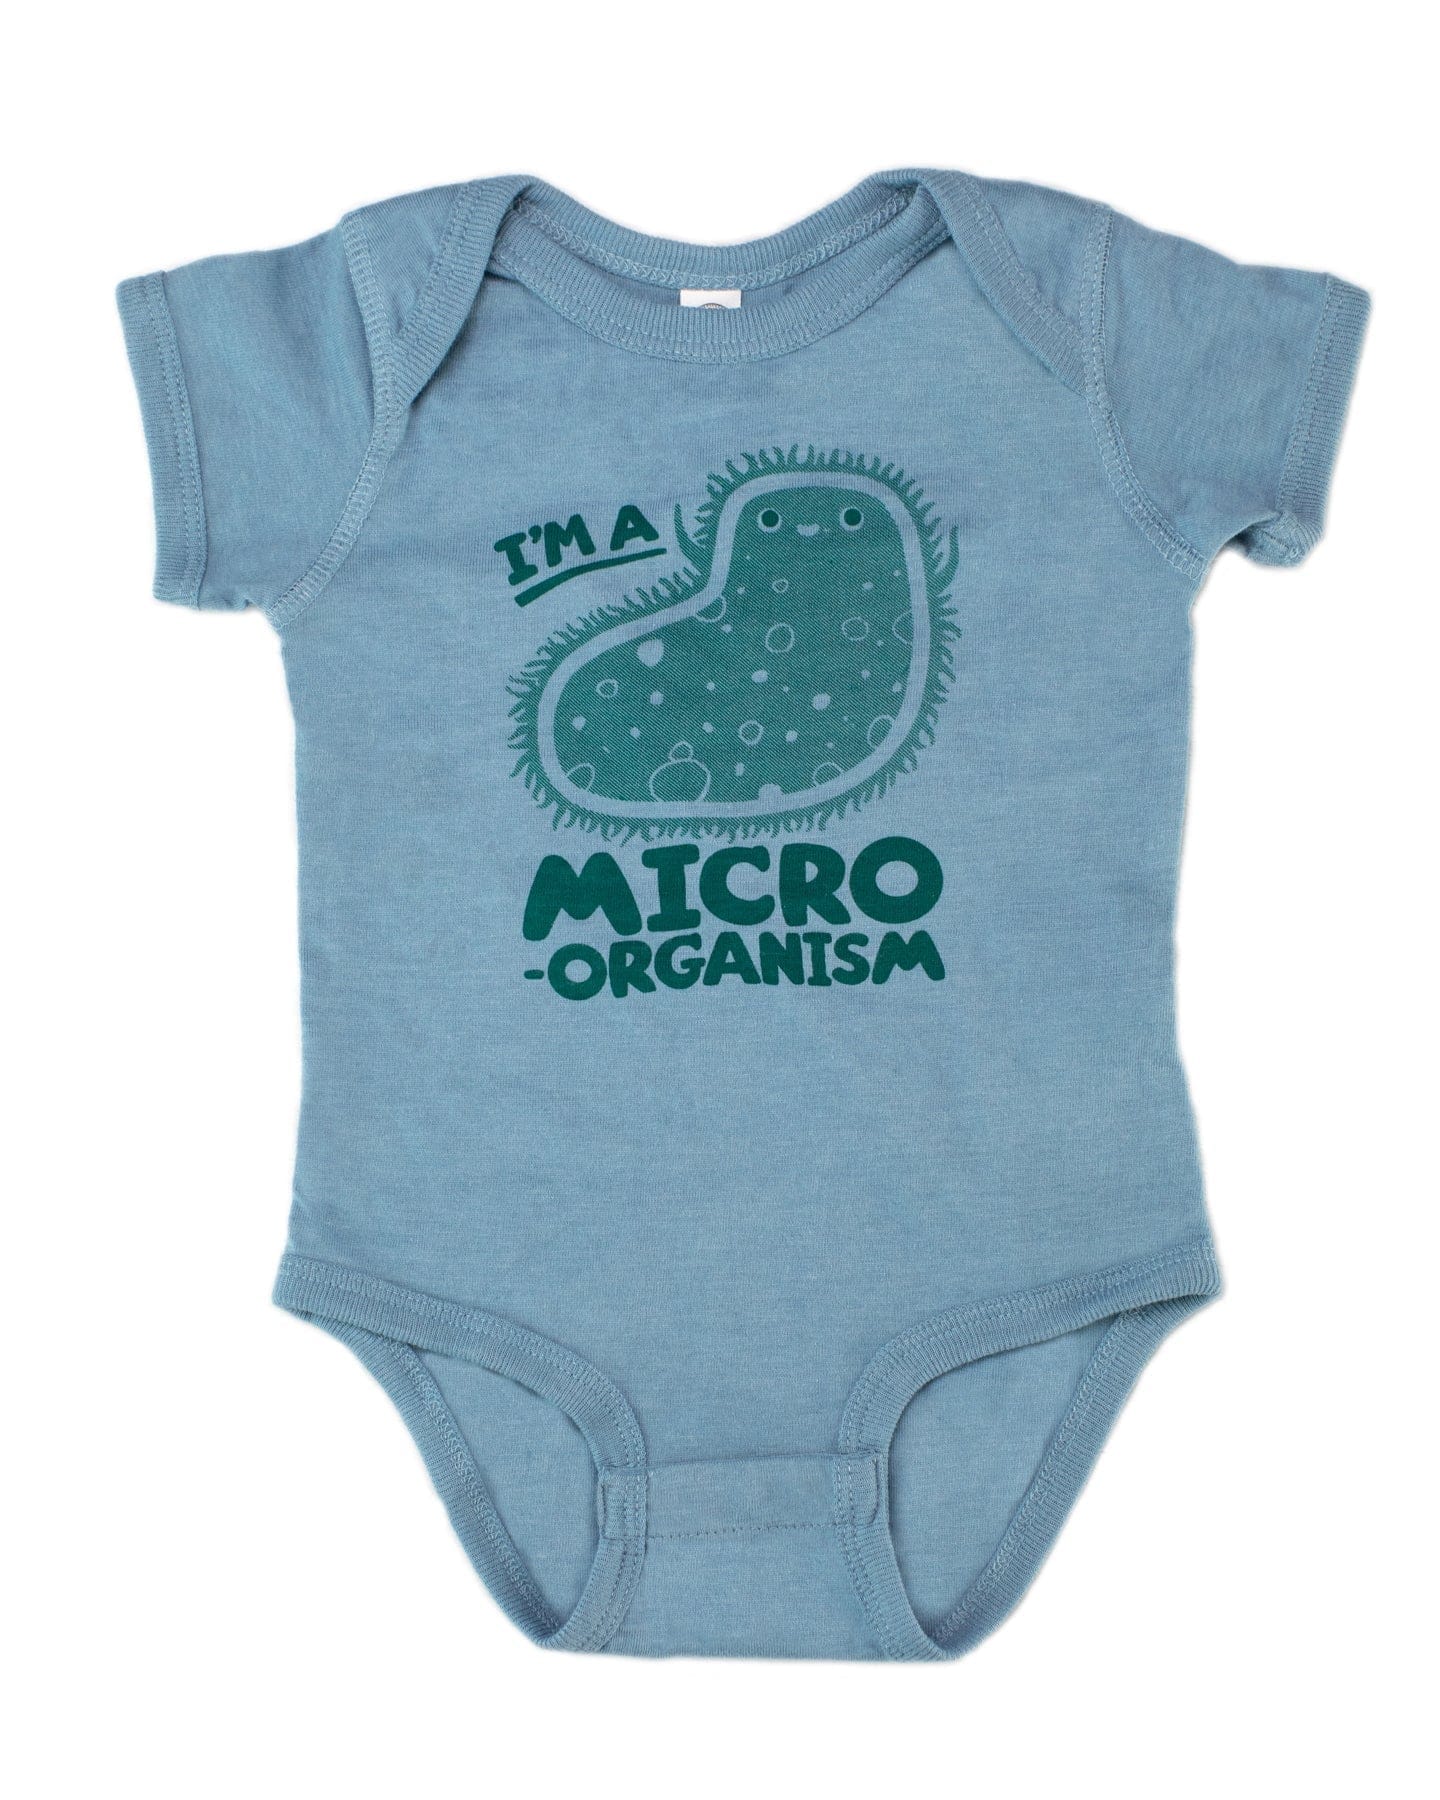 Microorganism Babysuit Cognitive Surplus